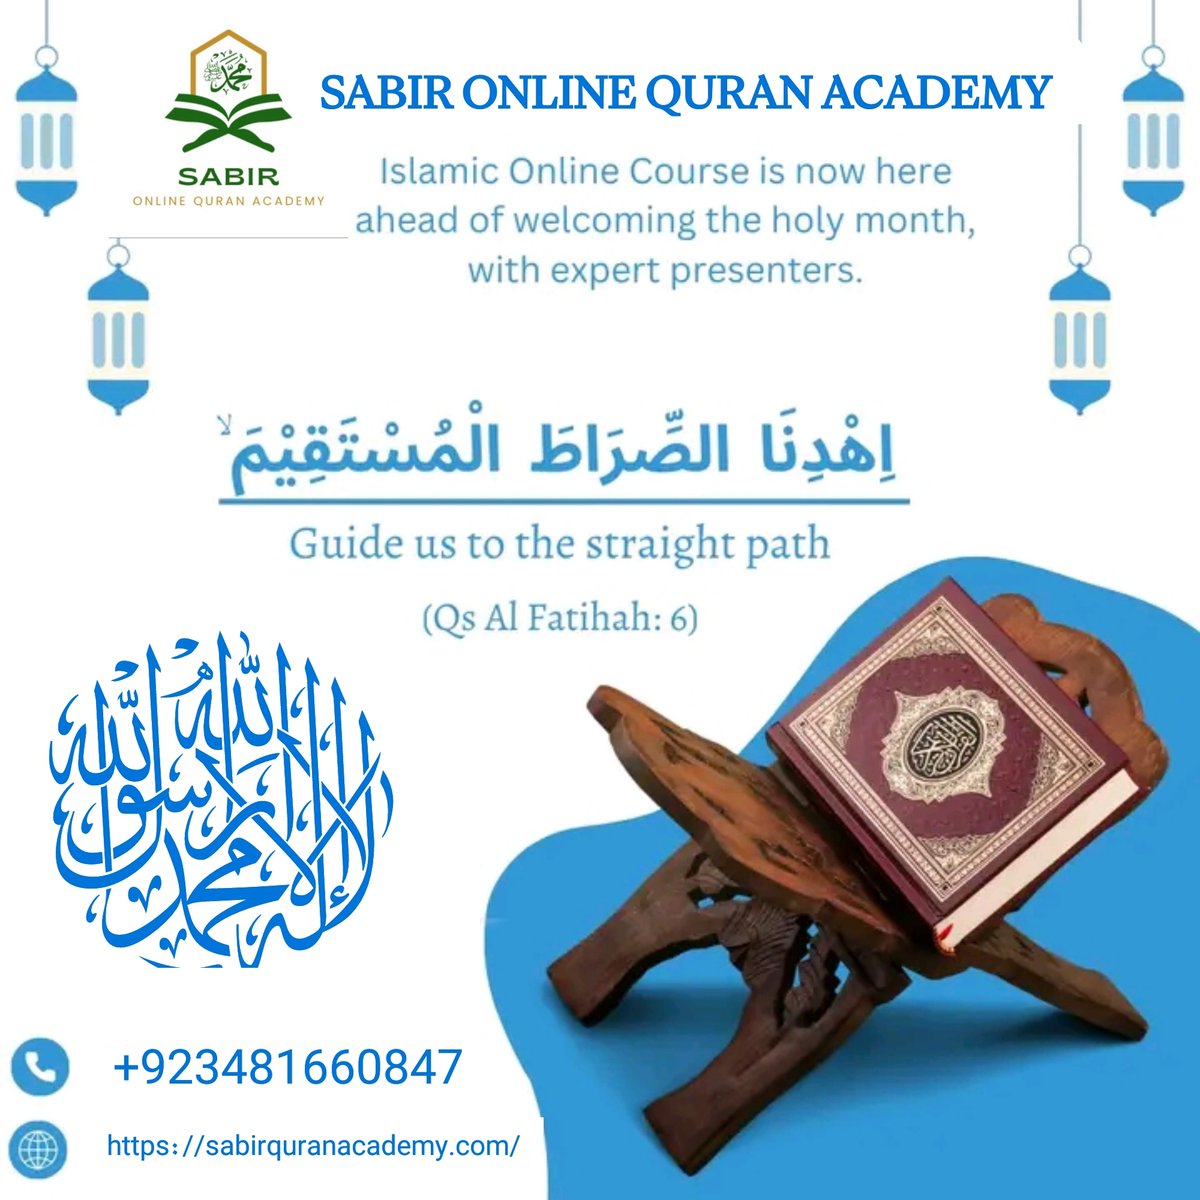 Learn Quran online with Sabir Online Quran Academy. Join us at sabirquranacademy.com 🌟📖

#QuranEducation #LearnQuran #SabirQuranAcademy #OnlineQuranClasses #USIslamicStudies #UKQuranicLearning #Quran #OnlineLearning